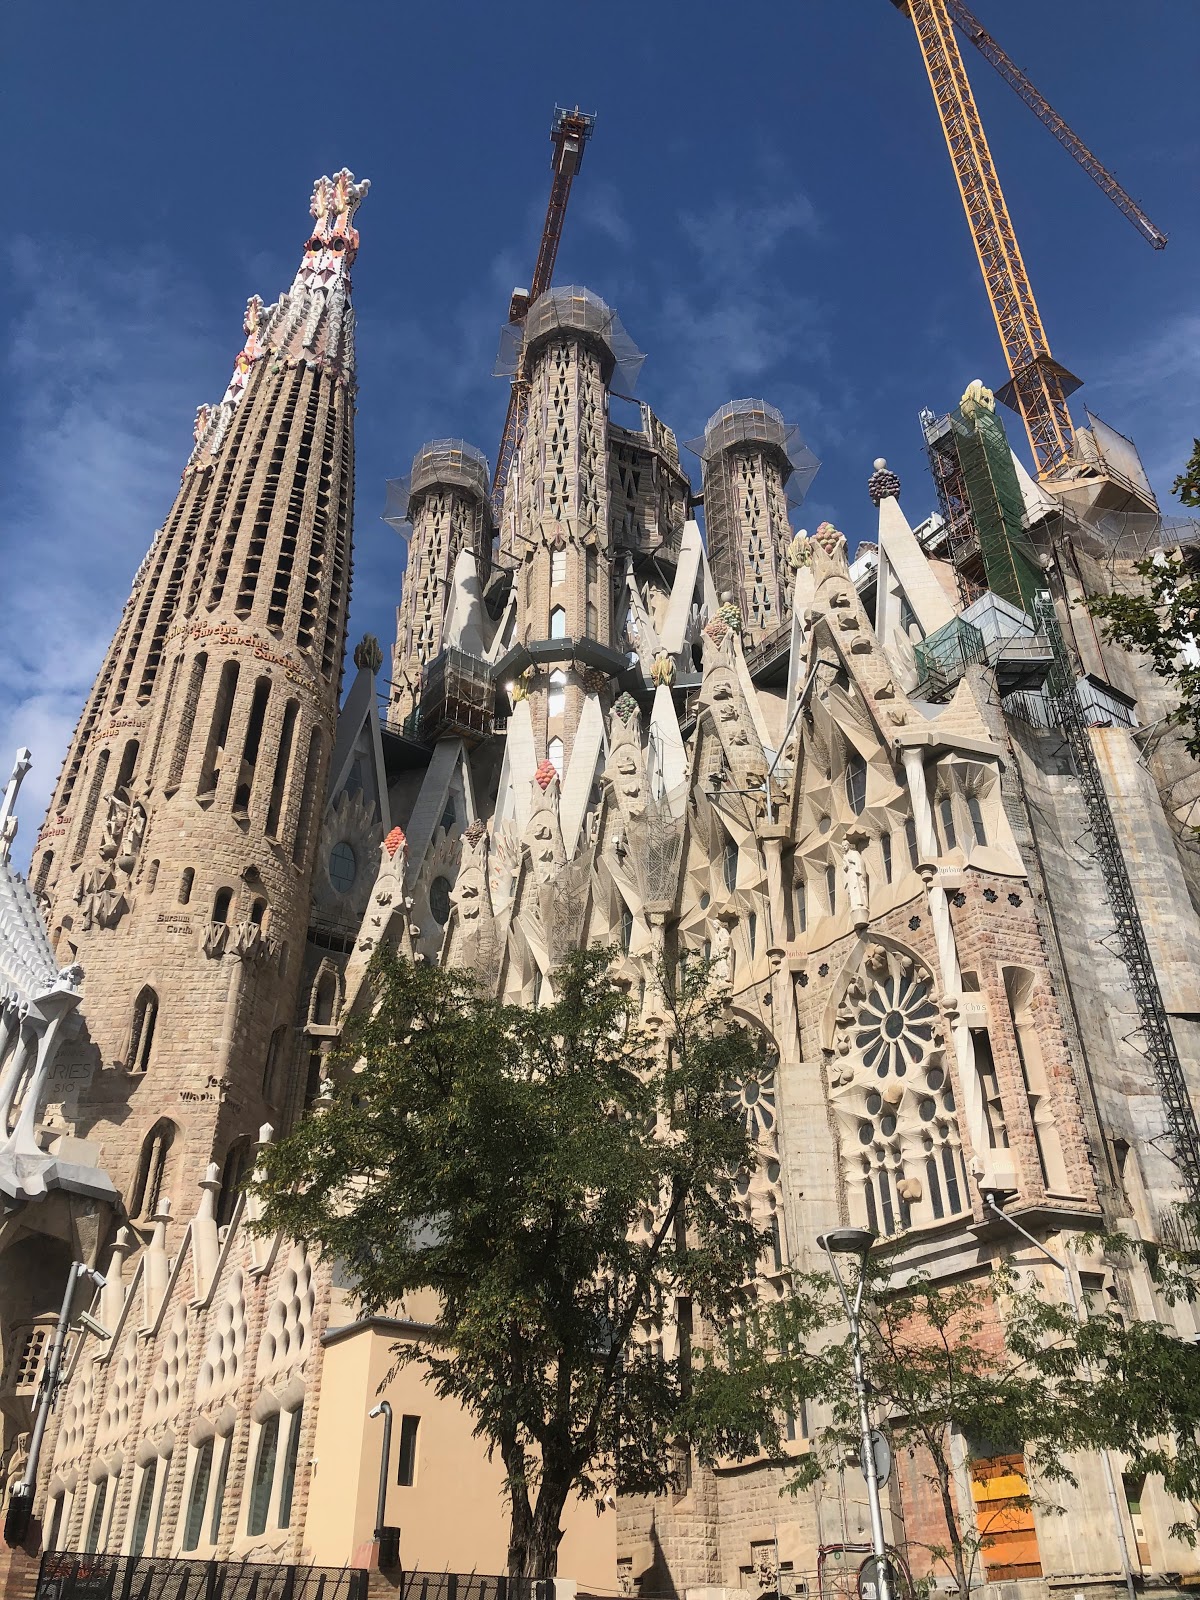 An image of La Sagrada Família